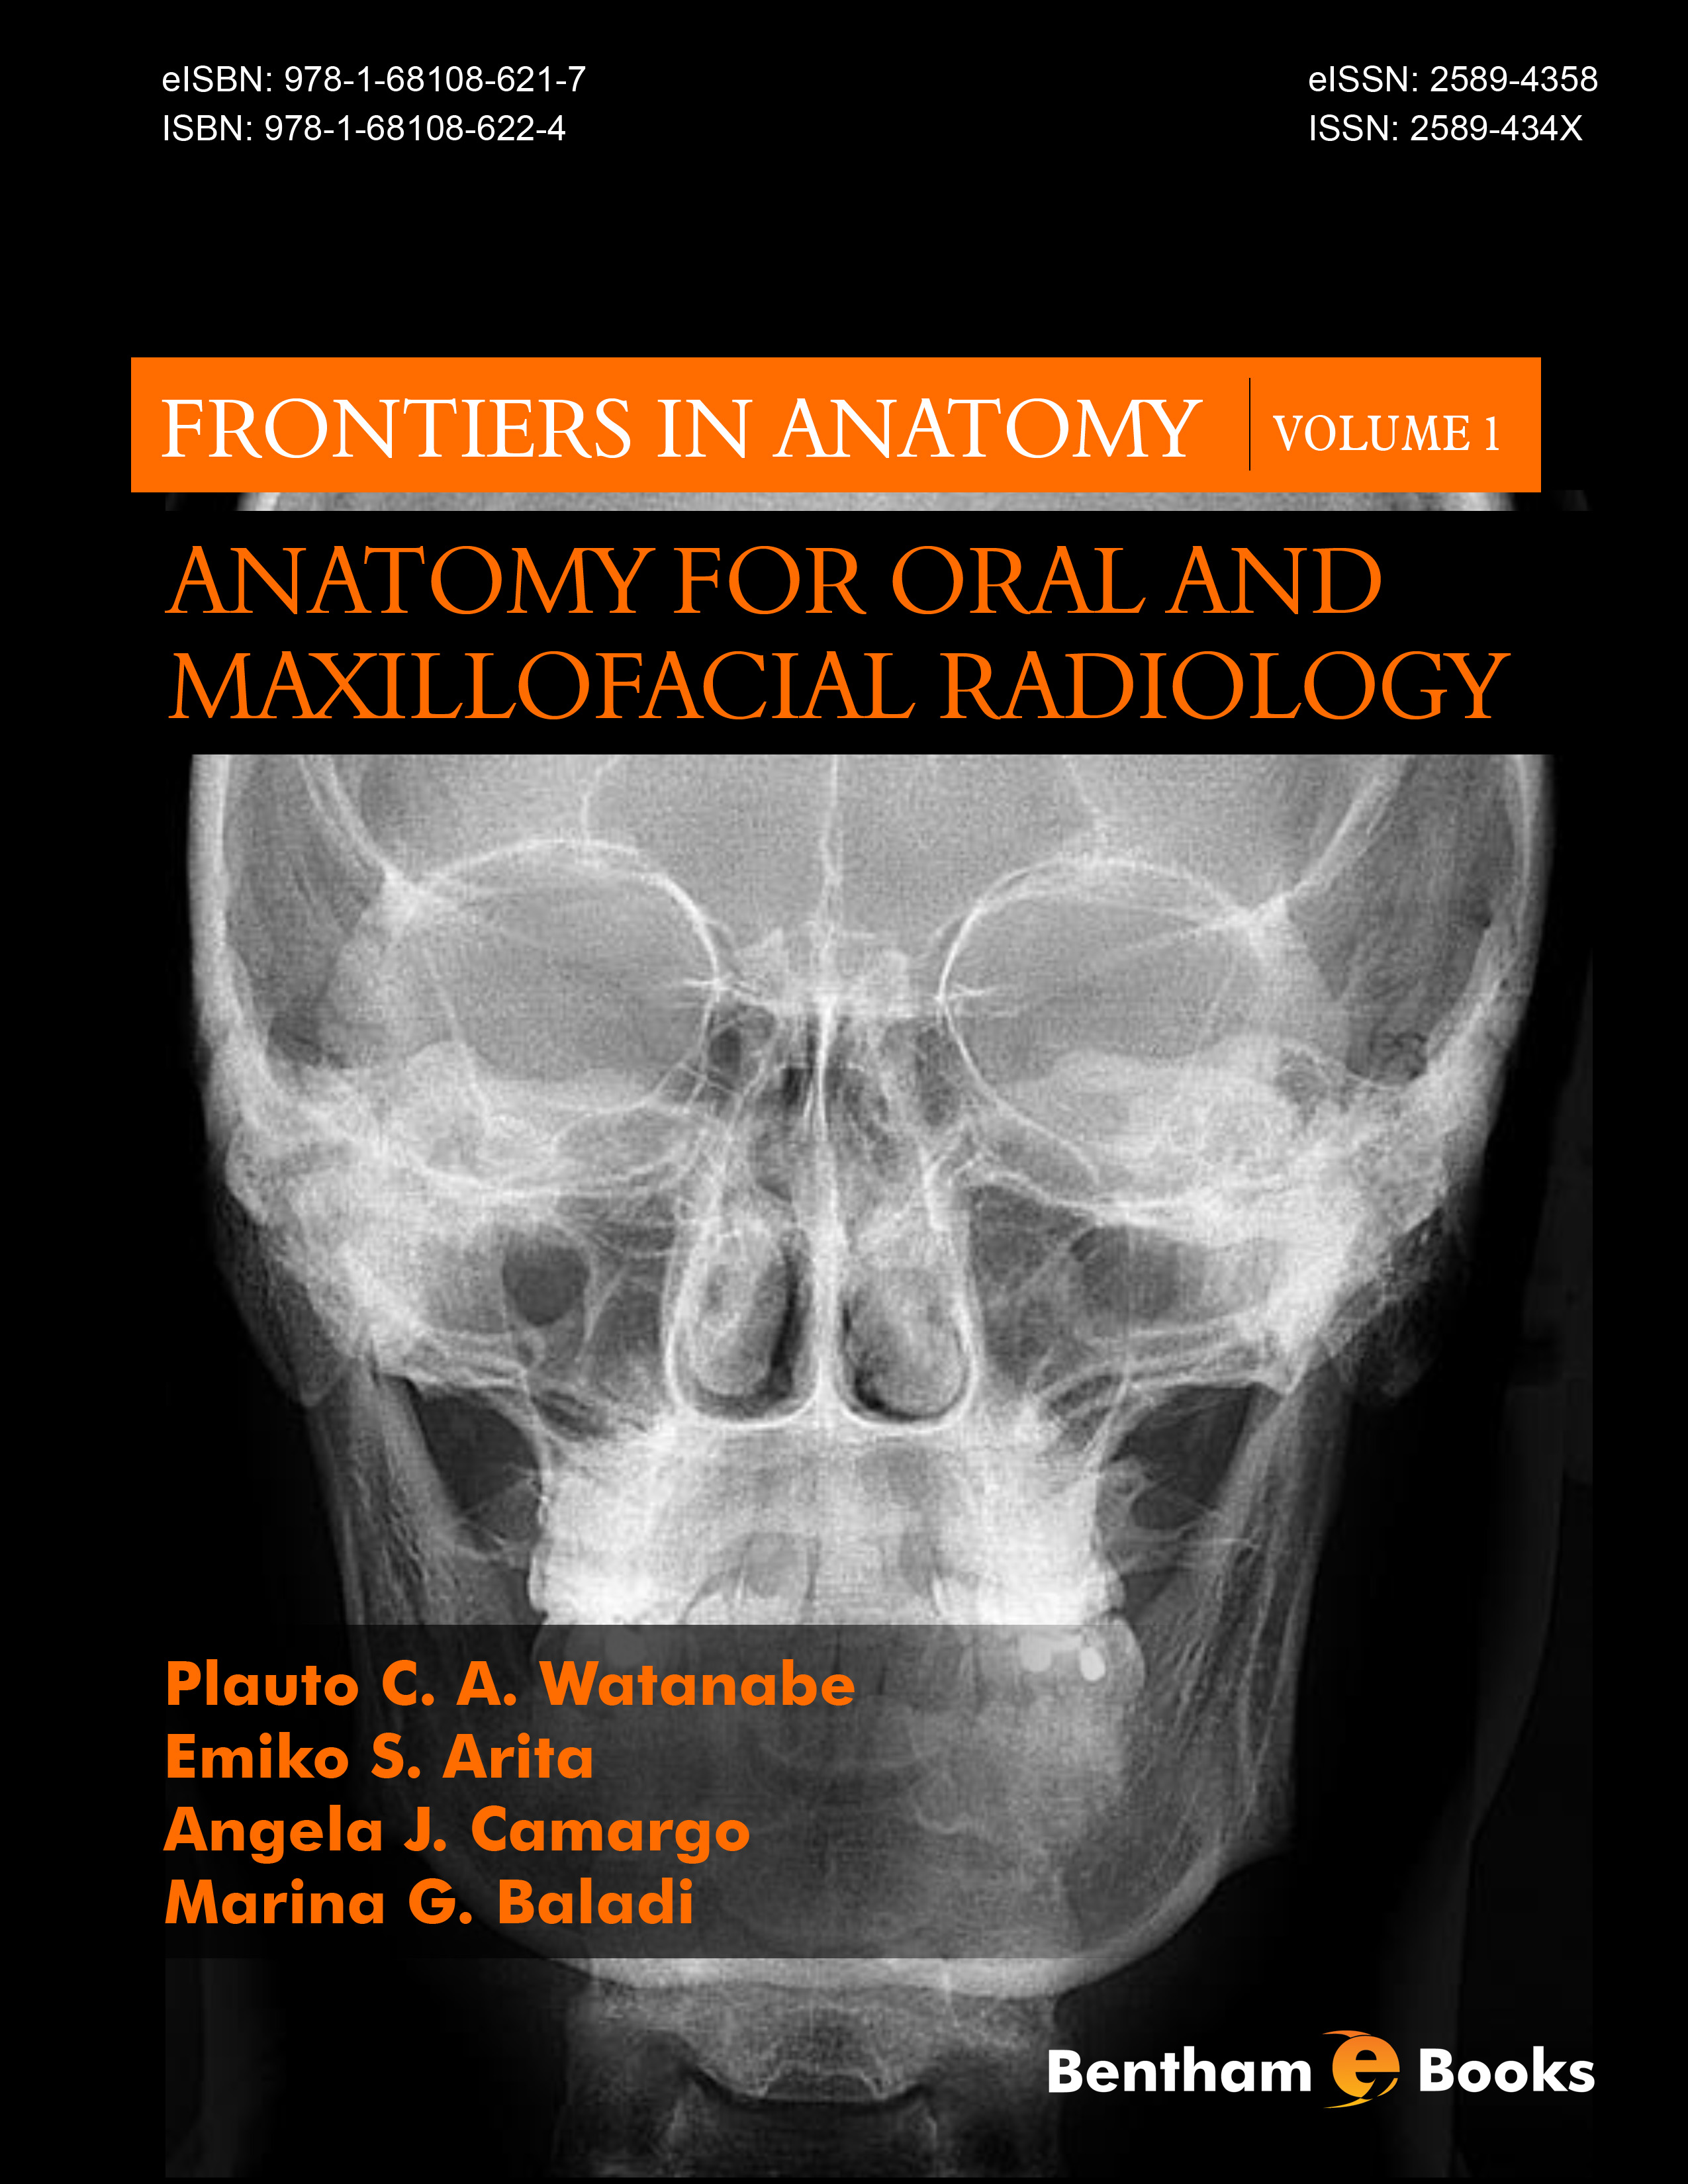 Anatomy for Oral and Maxillofacial Radiology